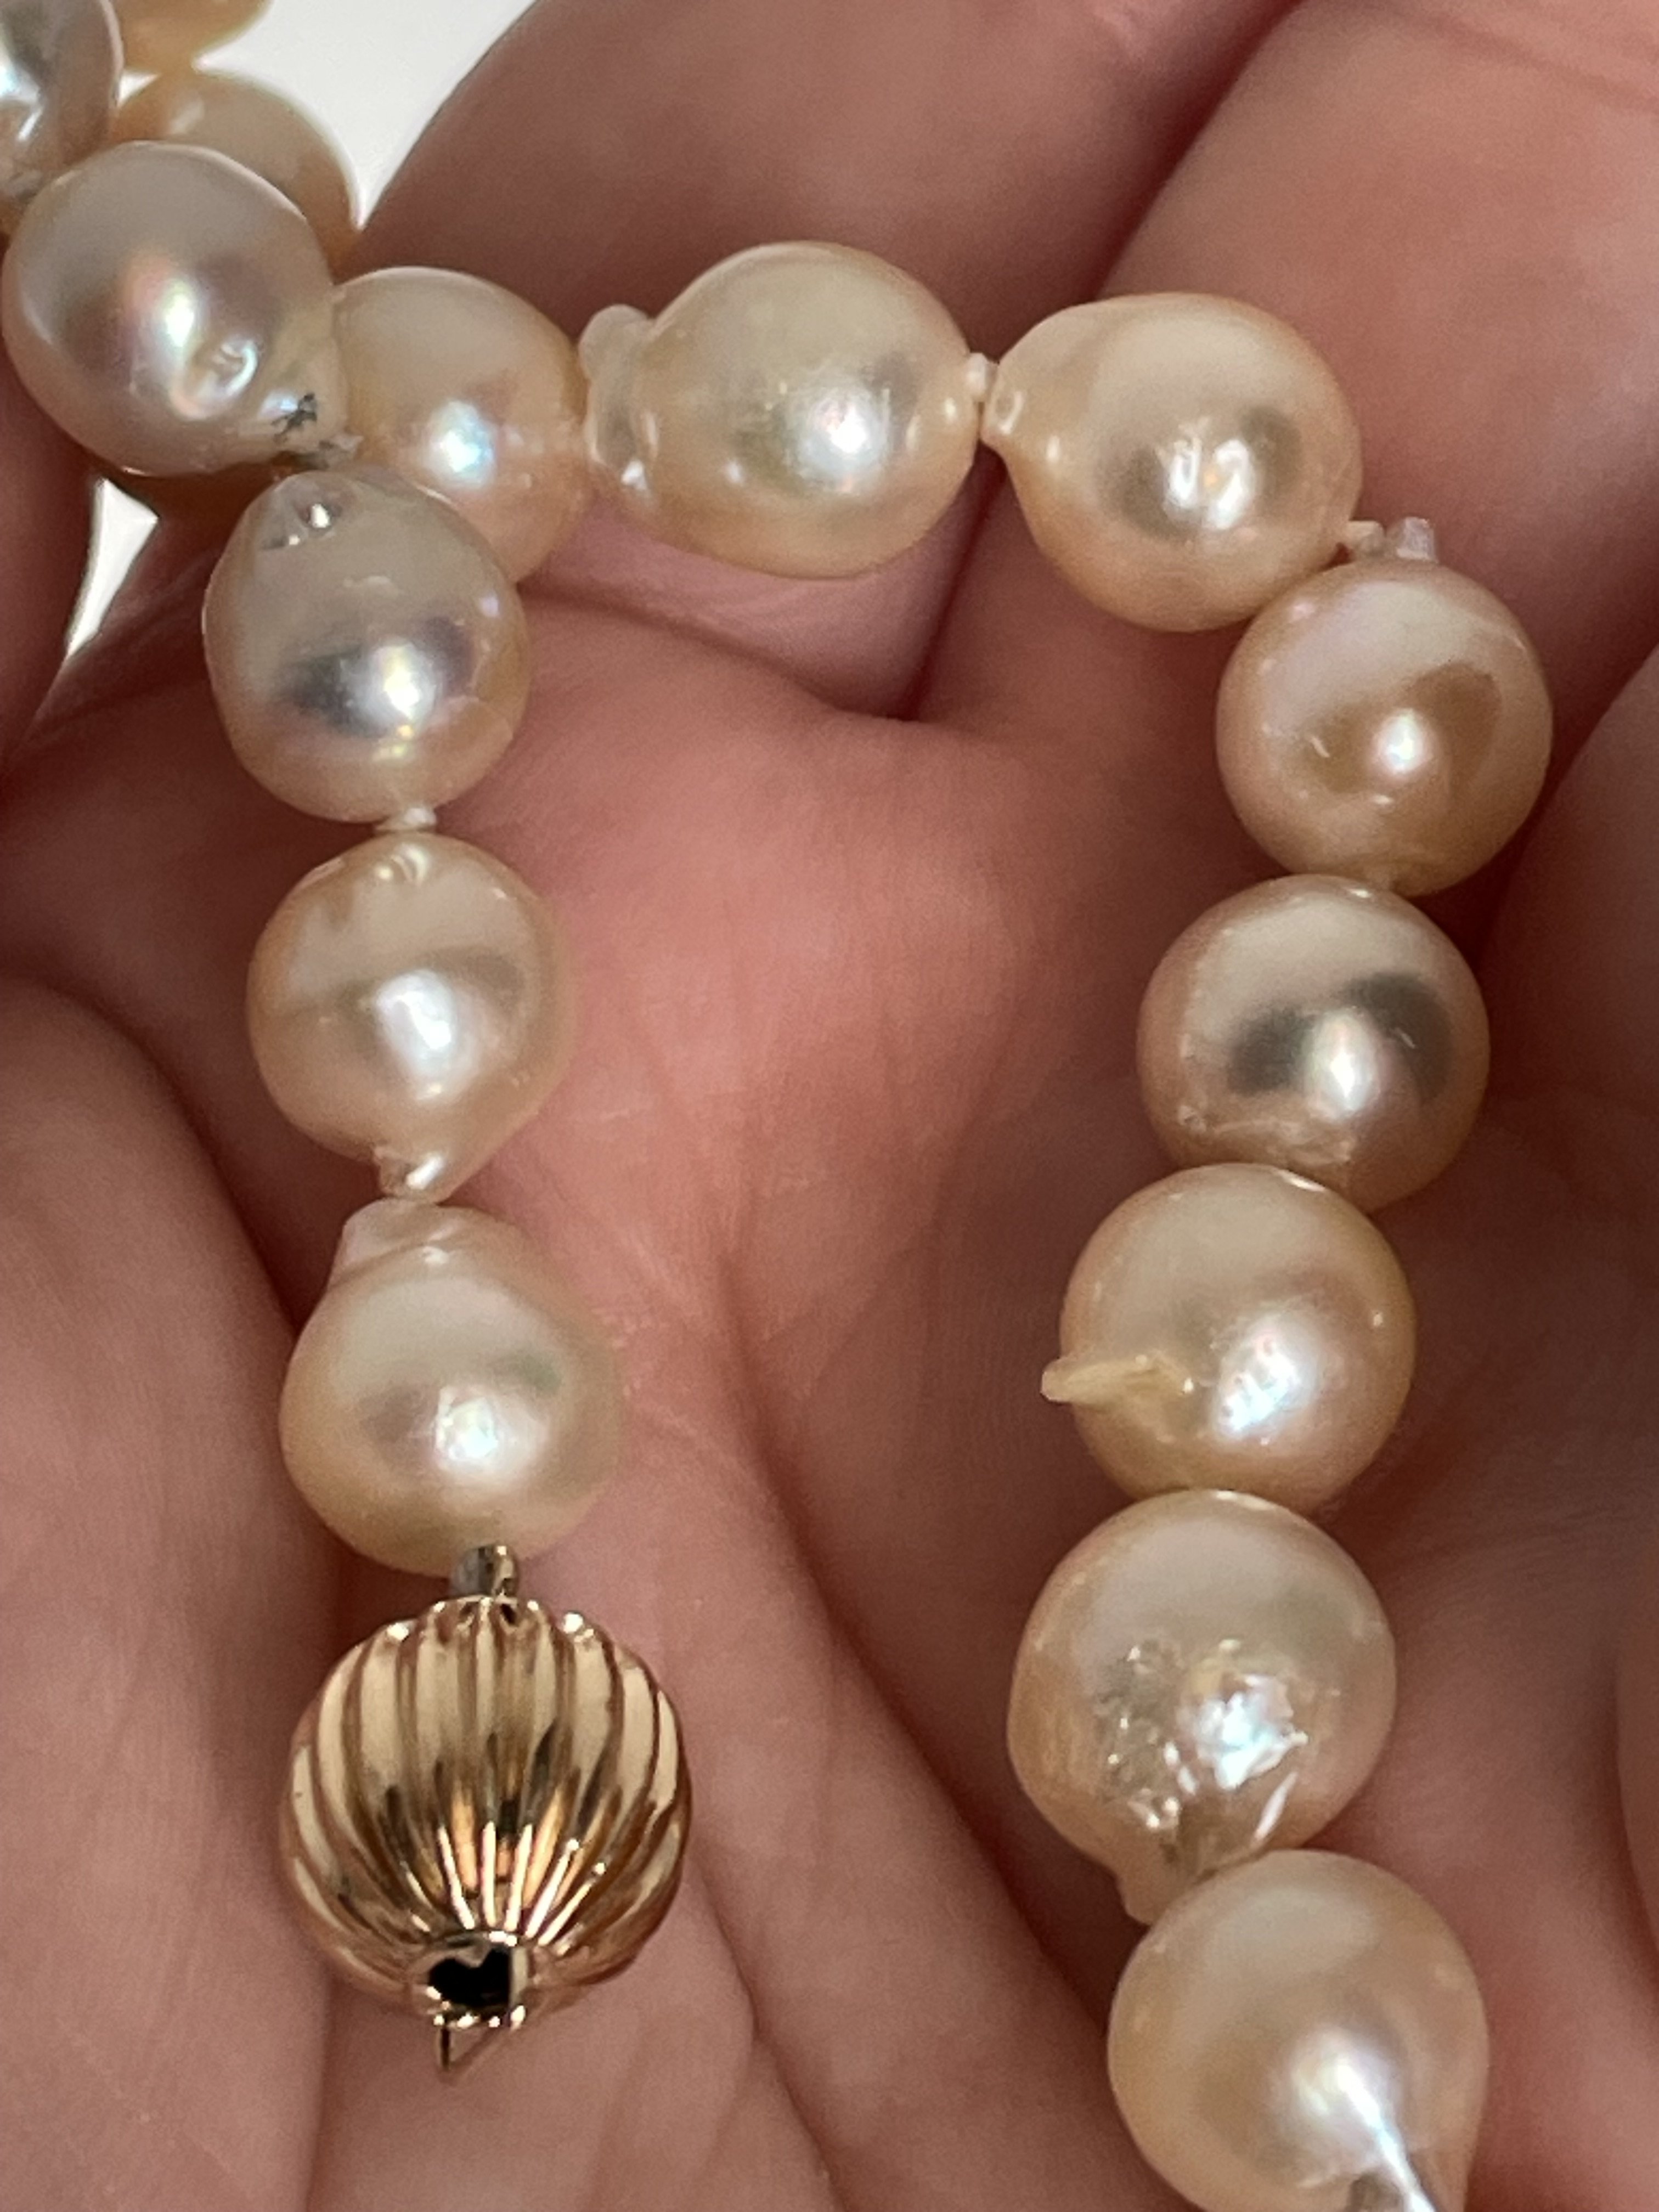 Identifying pearls